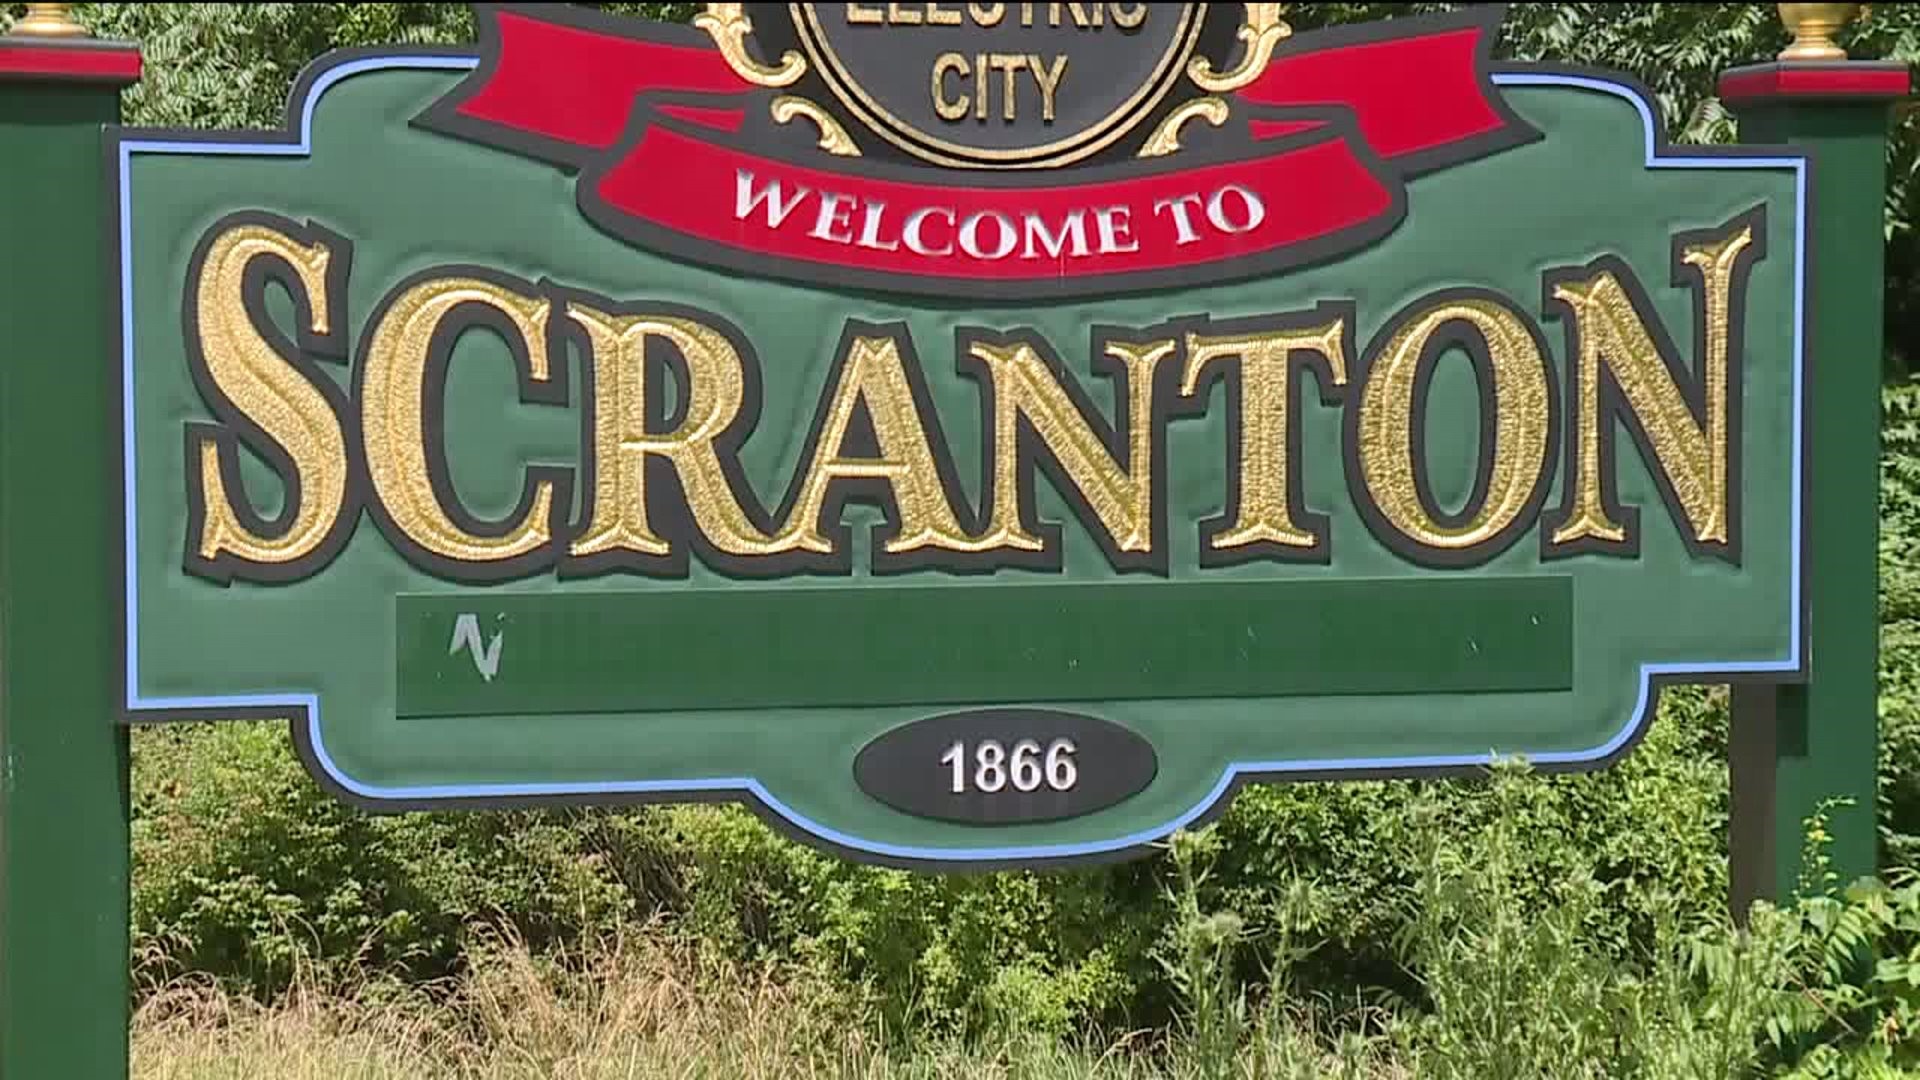 More Signs in Scranton Remove Former Mayor`s Name